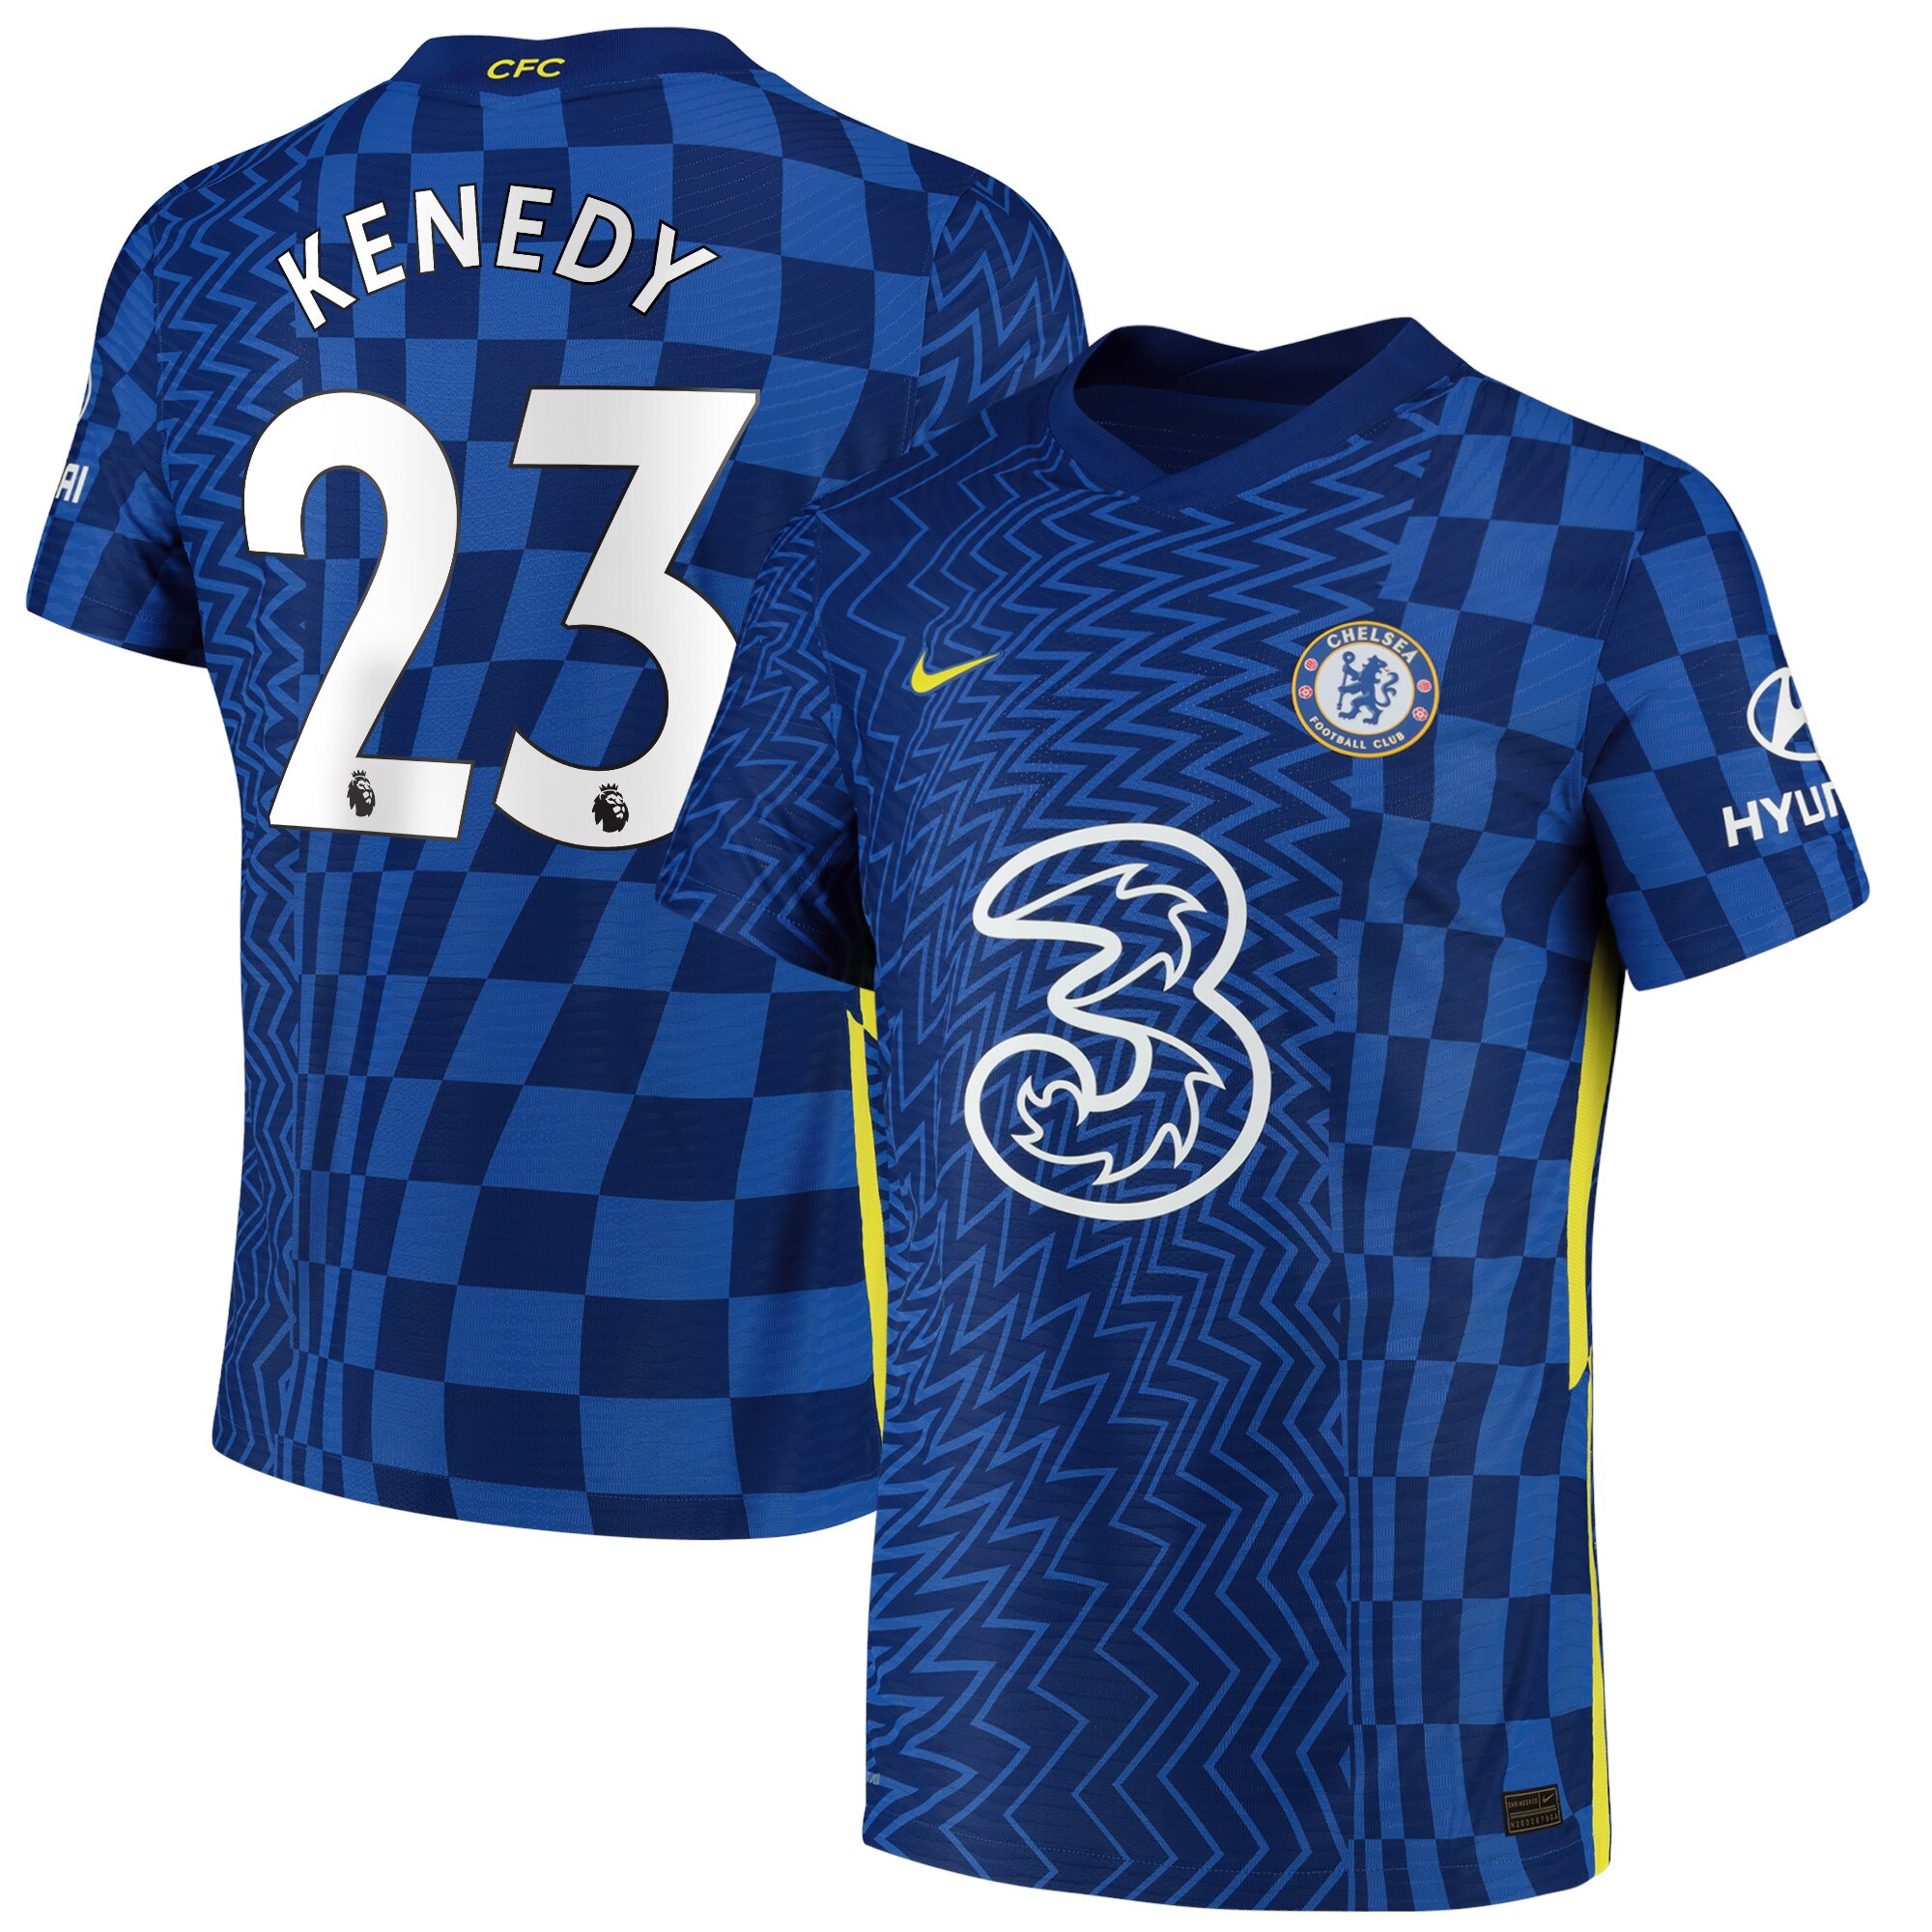 Chelsea Home Vapor Match Shirt 2021-22 with Kenedy 23 printing